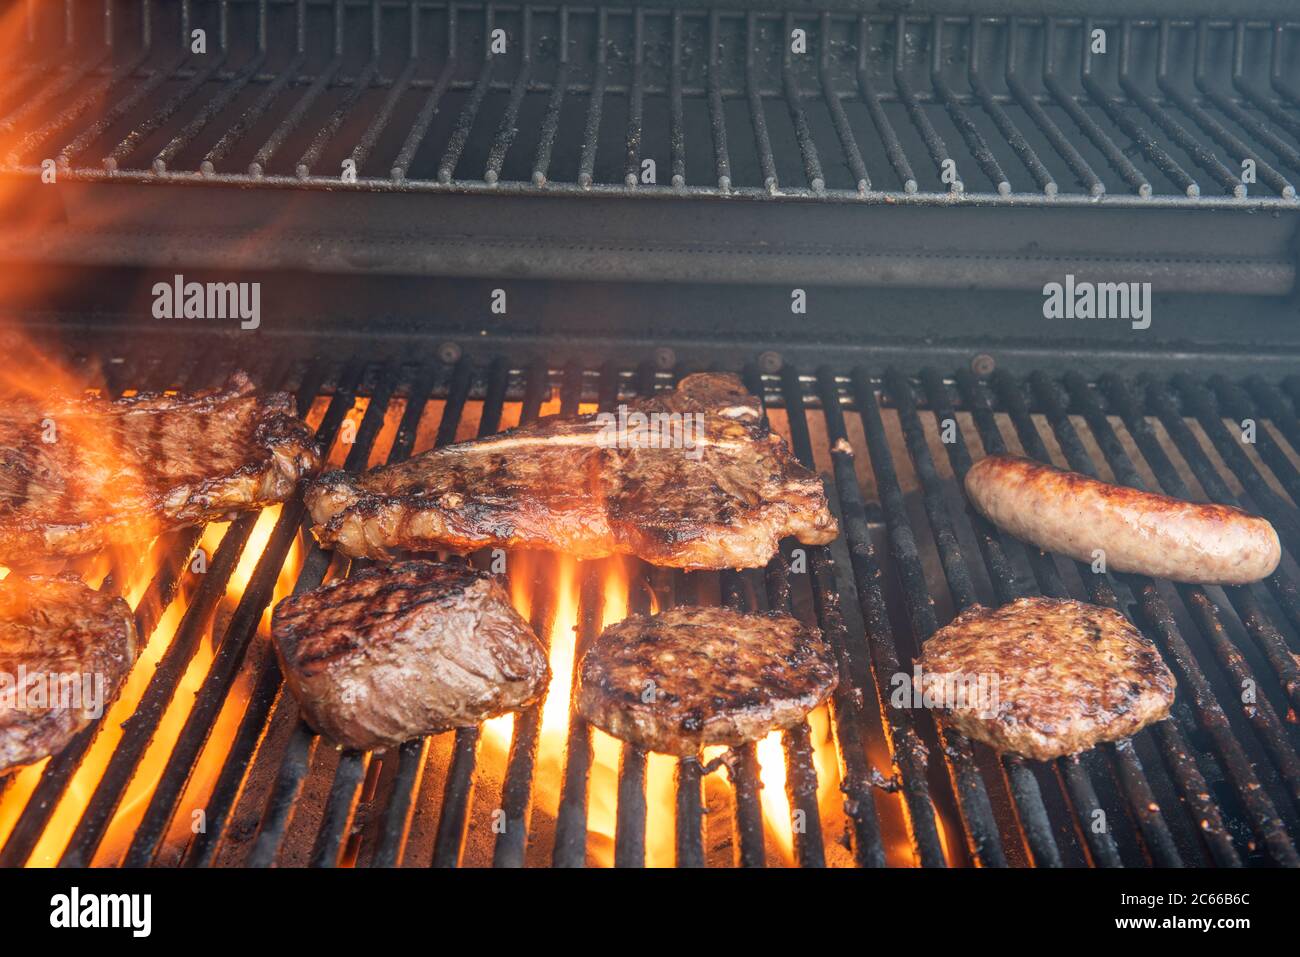 A grill full of different steaks including ribeye, T-bone, porterhouse, New York strip, Kansas city strip, filet mignon, plus hamburgers and brats wit Stock Photo